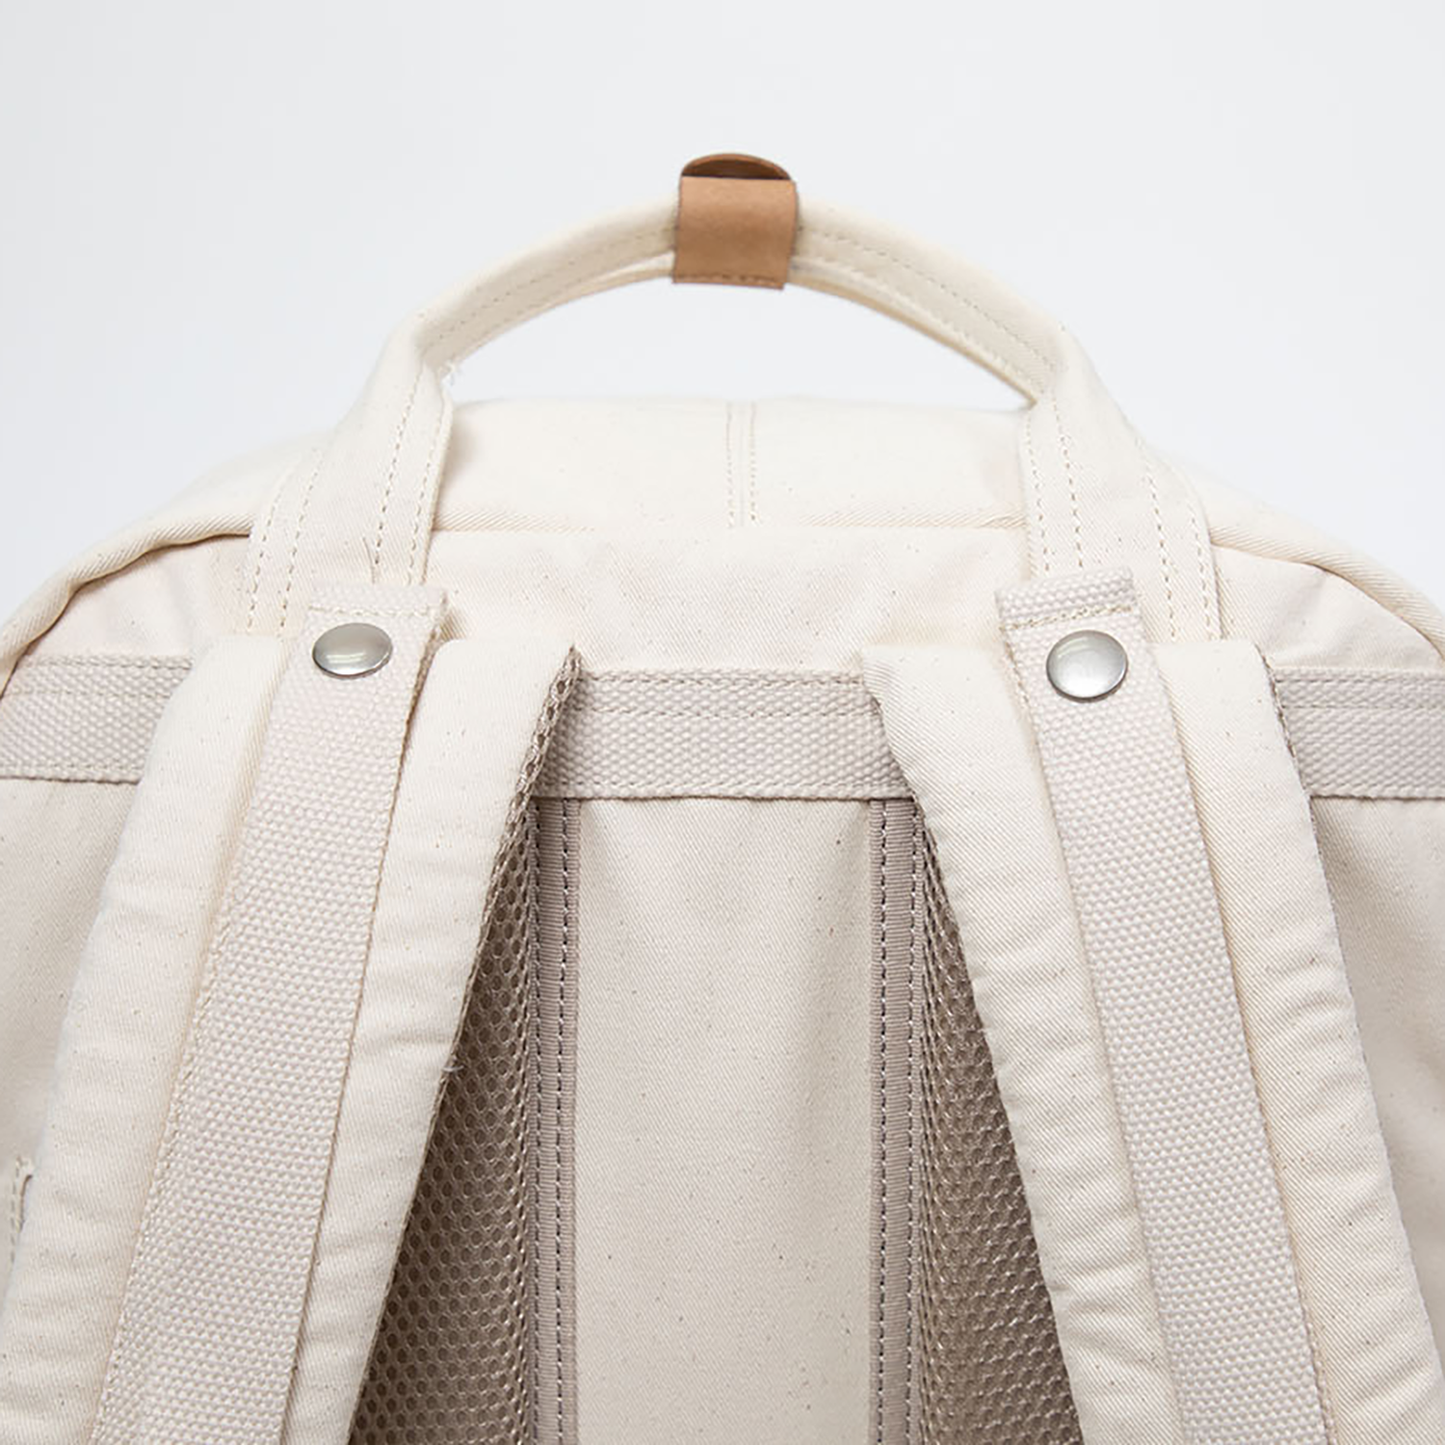 Macaroon Large Organic Cotton Series Backpack